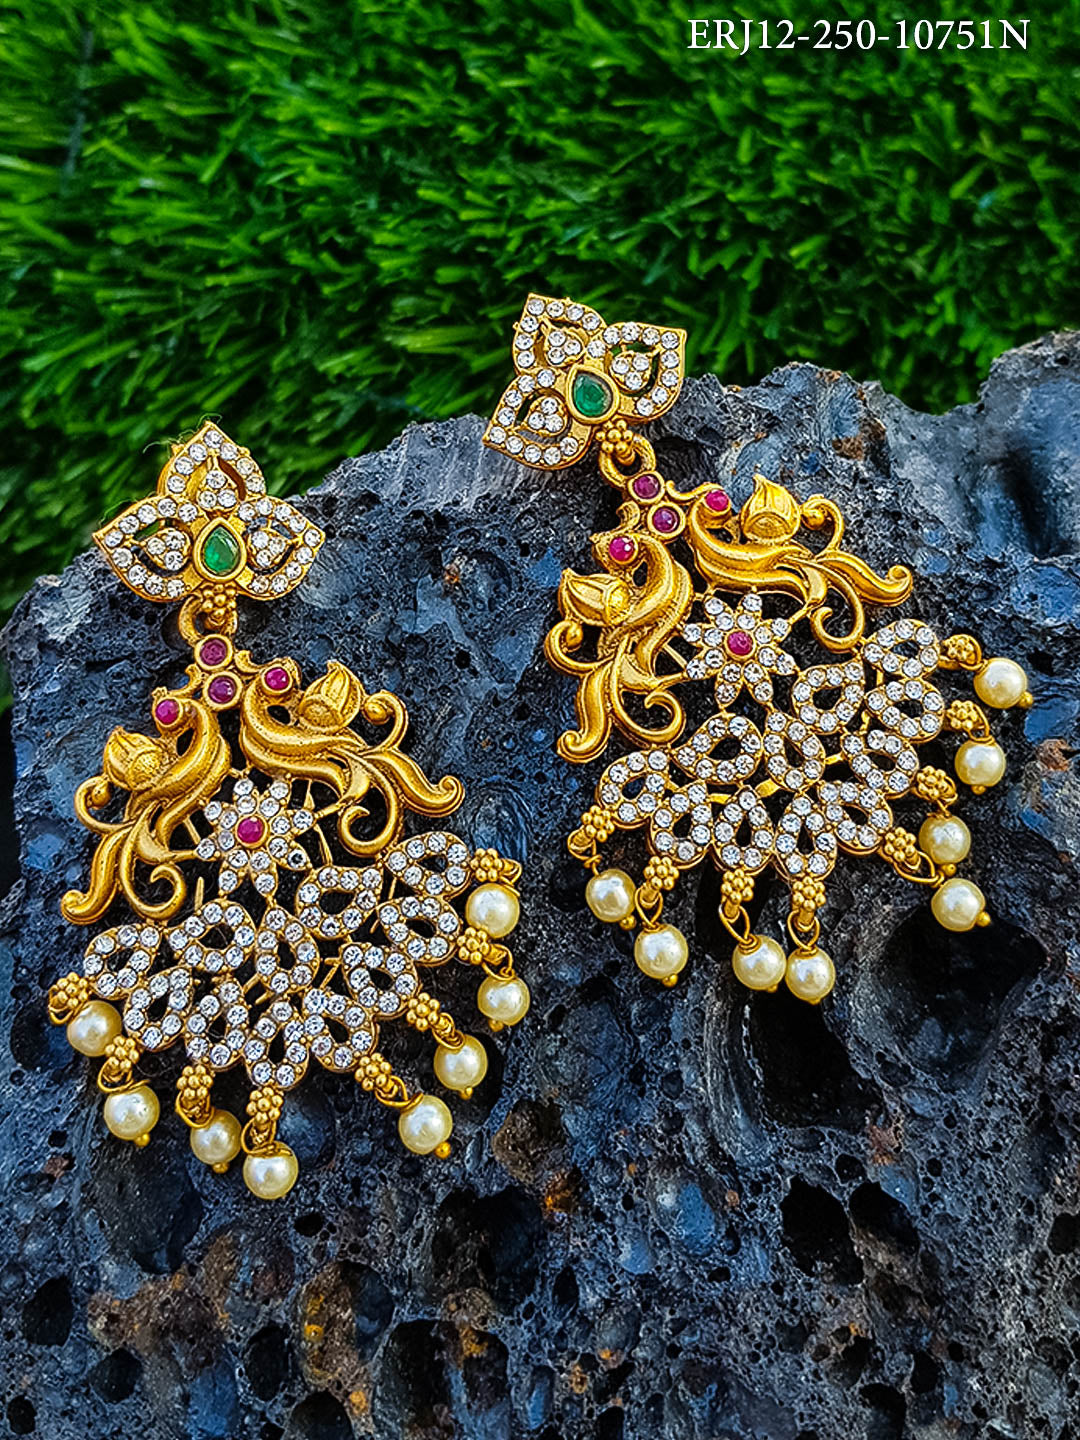 Gold Plated Big Jumkis / Earrings / Hangings with Artificial Stones 10751N